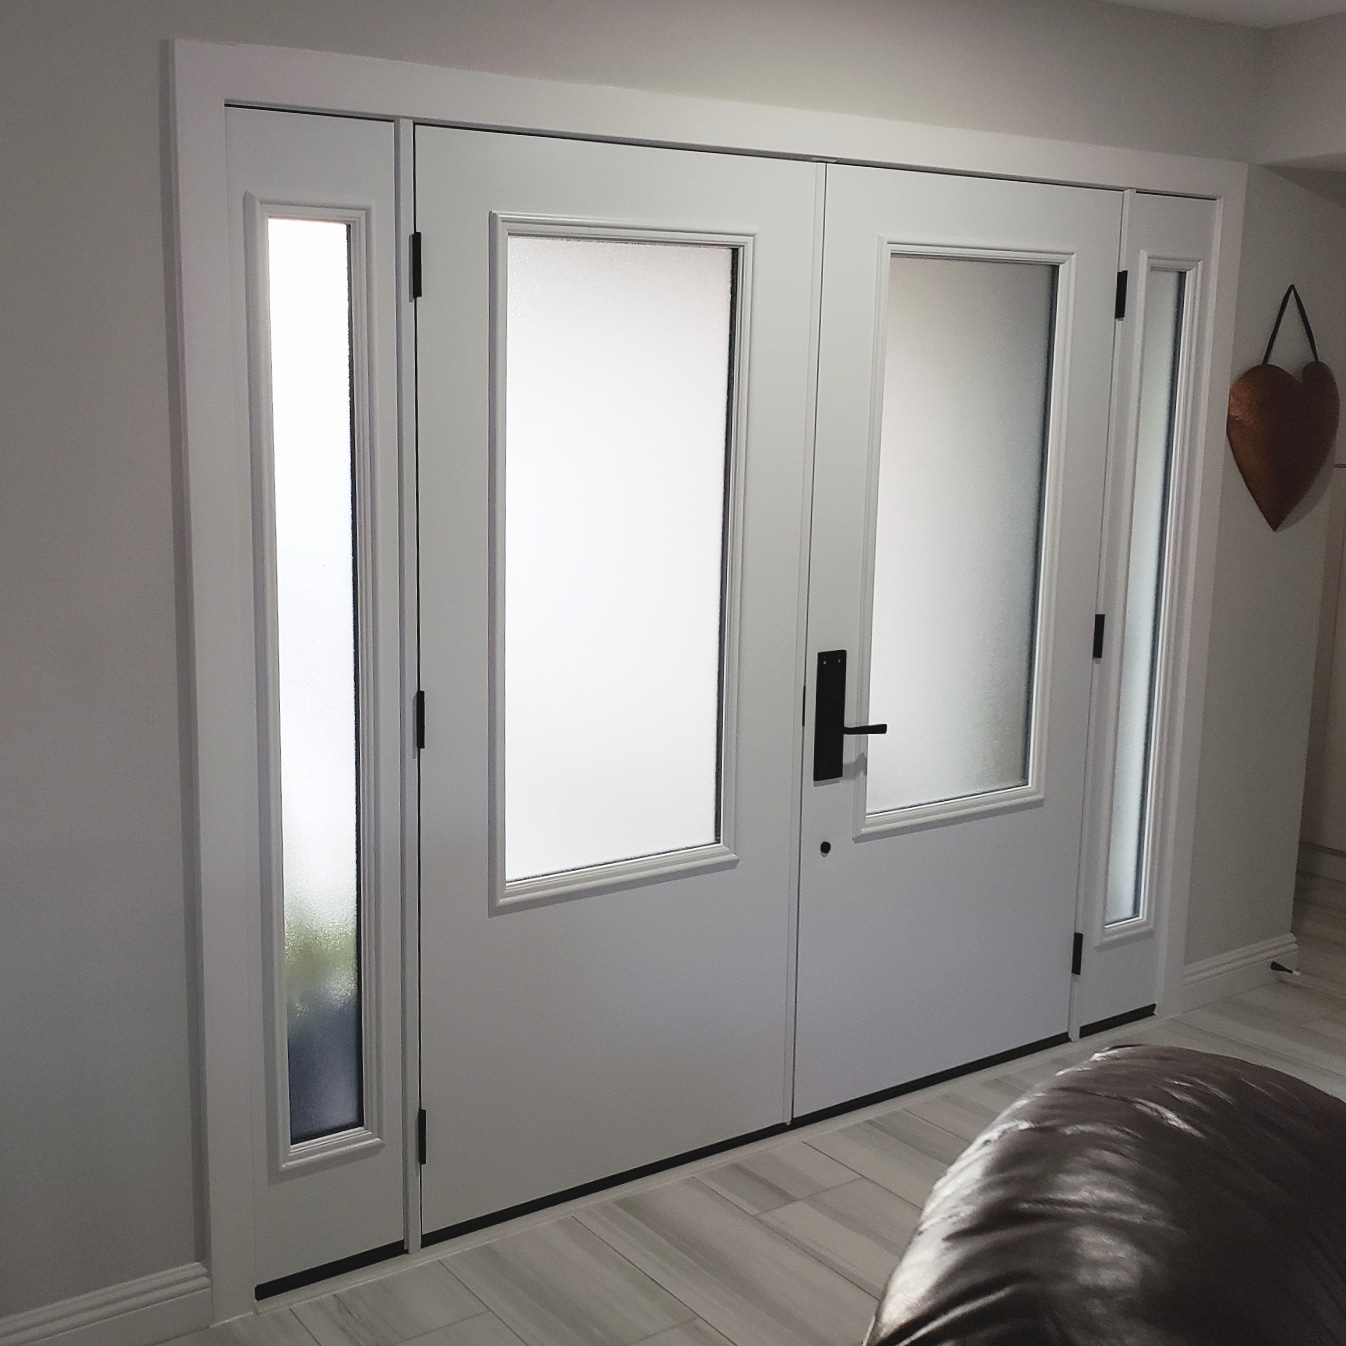 Arizona Window and Door in Scottsdale and Tucson showing modern white front doors